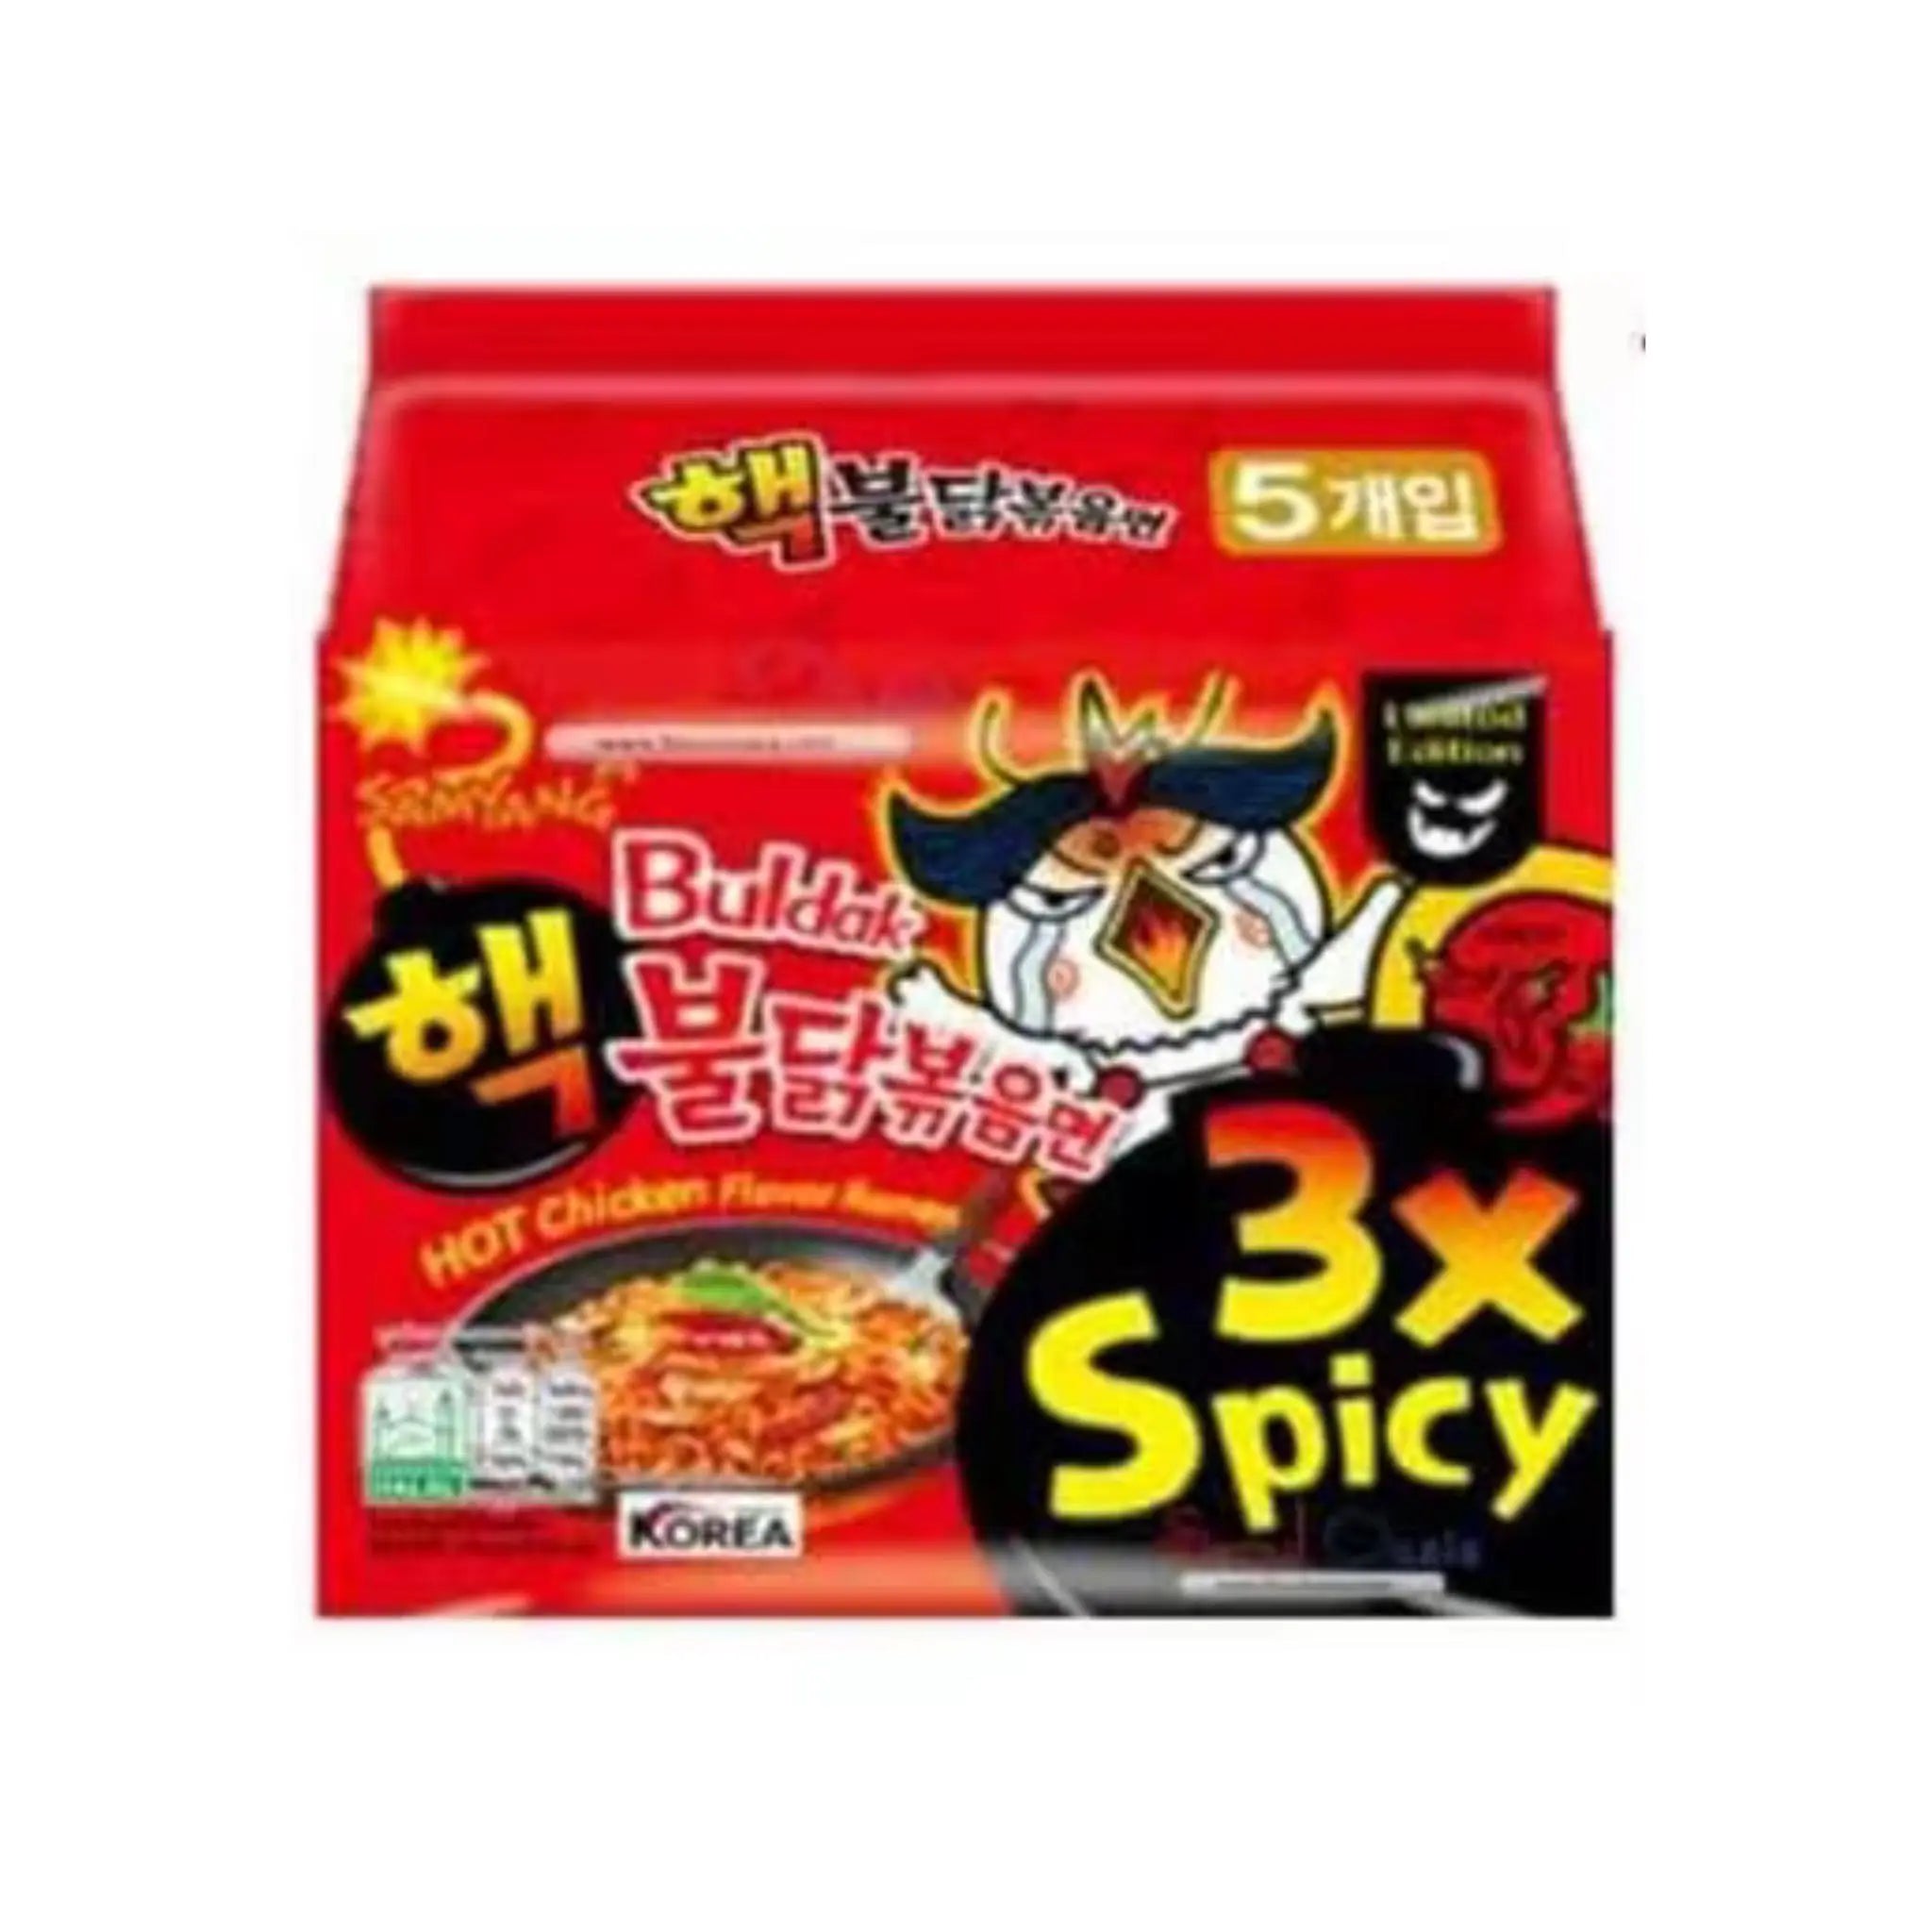 Samyang Extreme 3X Hot Chicken (140Grx5) x 8 Samyang